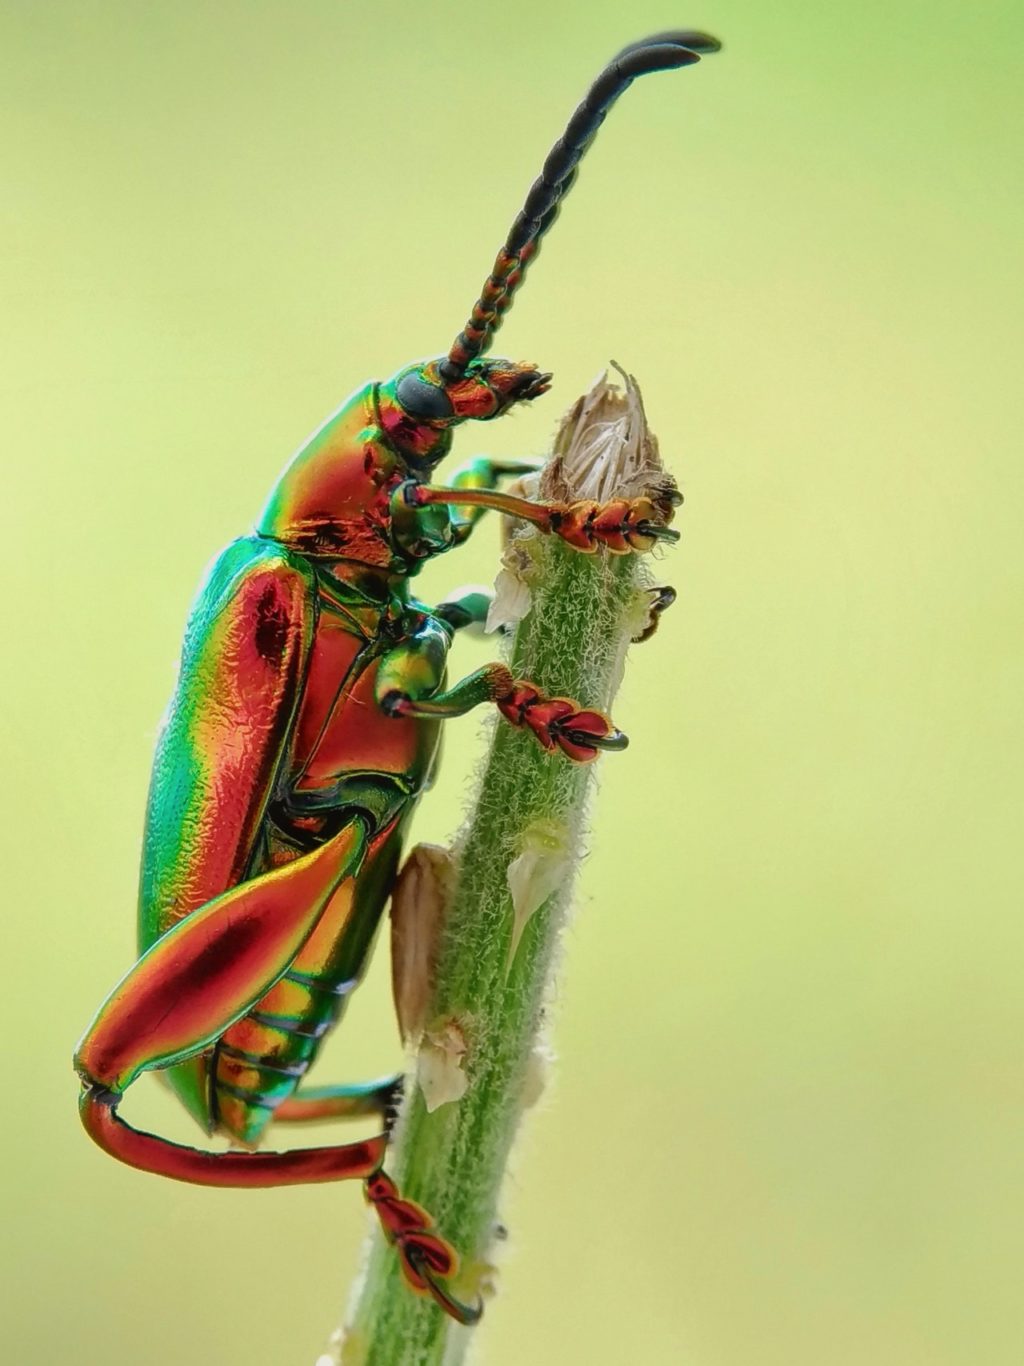 jewel beetle on tree branch